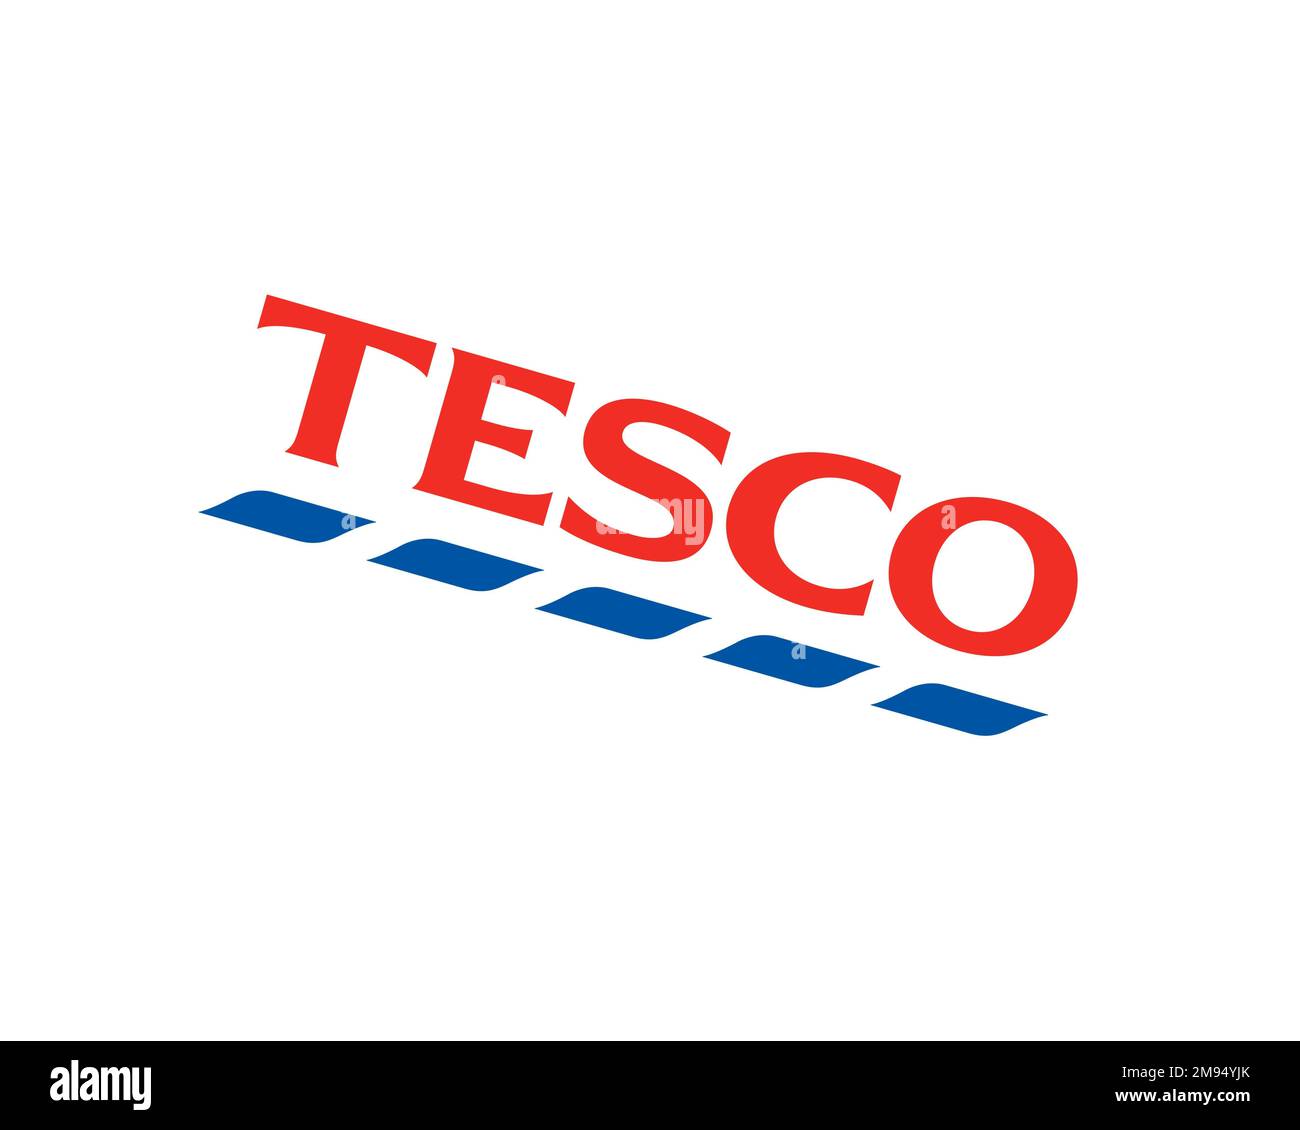 Tesco. com, rotated logo, white background B Stock Photo